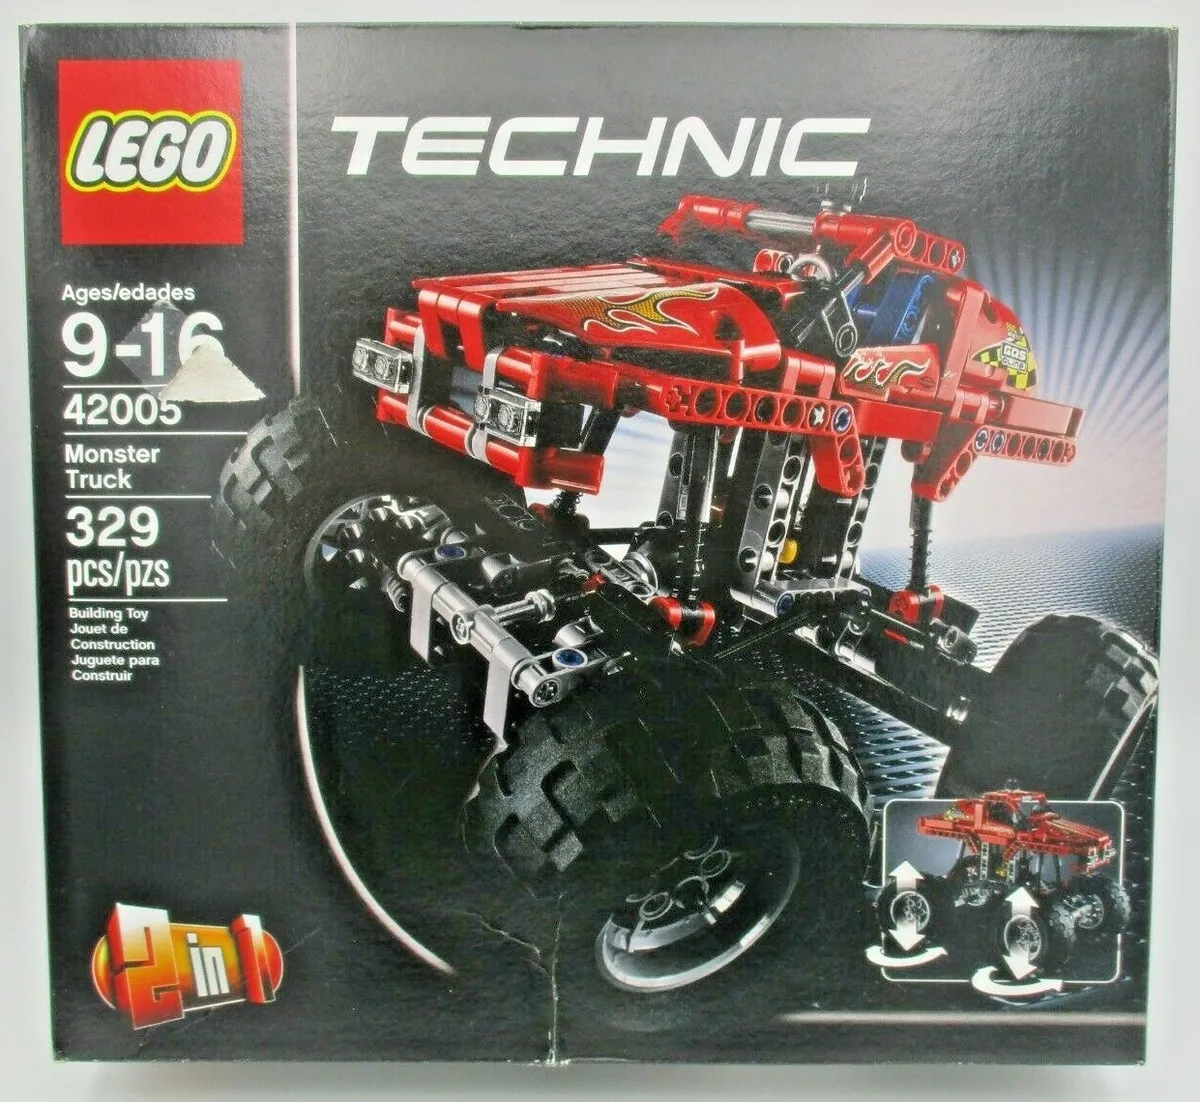 Lego Technic Monster Truck / Buggy 42005 Retired Toy NIB New in Box - Sealed 5702014966574 eBay